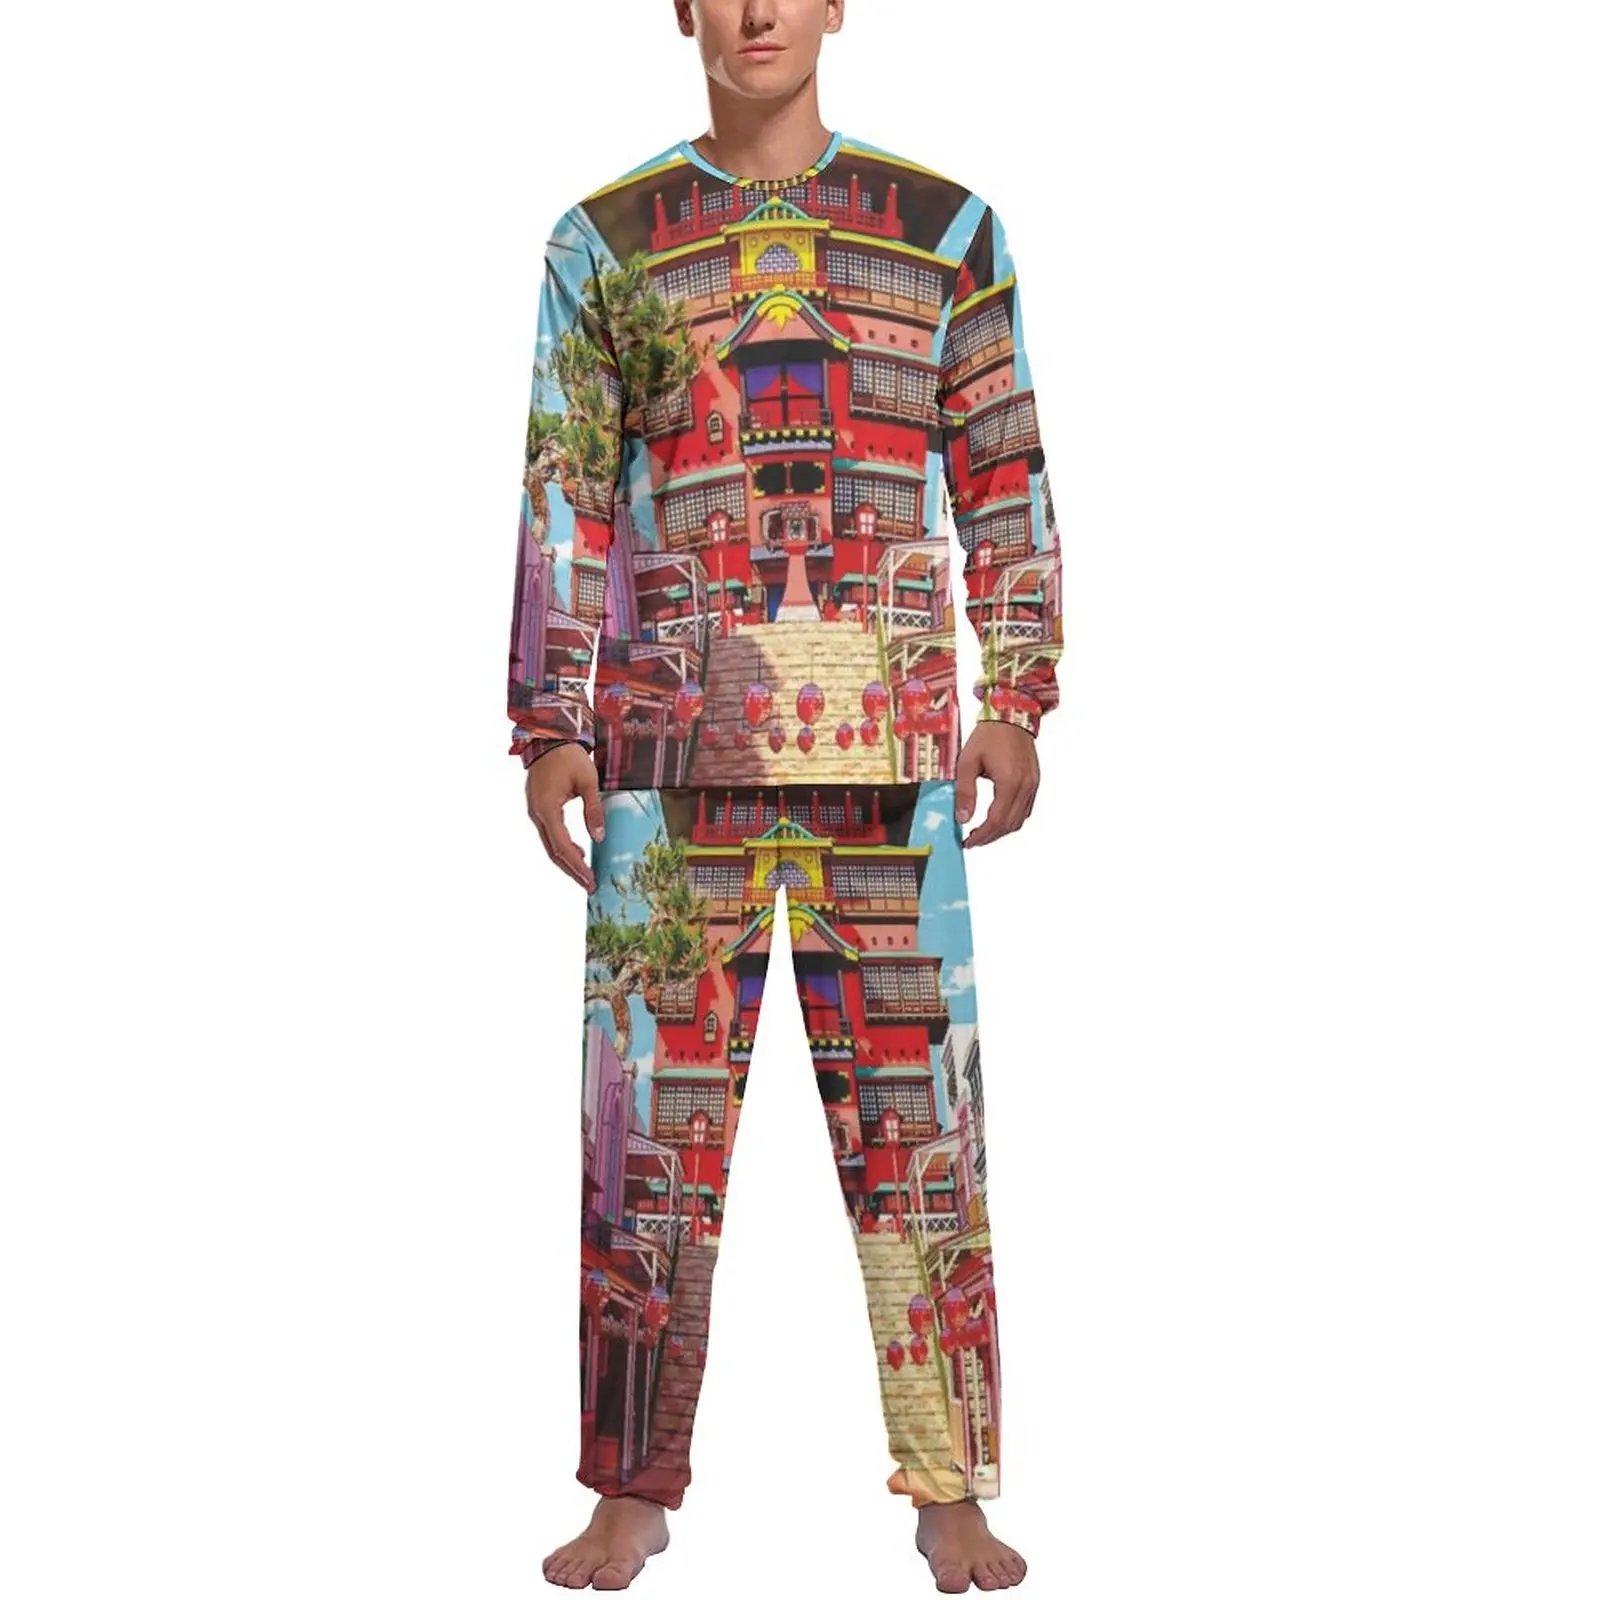 Spirited Away Pajamas Daily Rumah Siang Hari Aesthetic Sleepwear Man 2 Pieces Printed Long Sleeves Trendy Pajamas Set